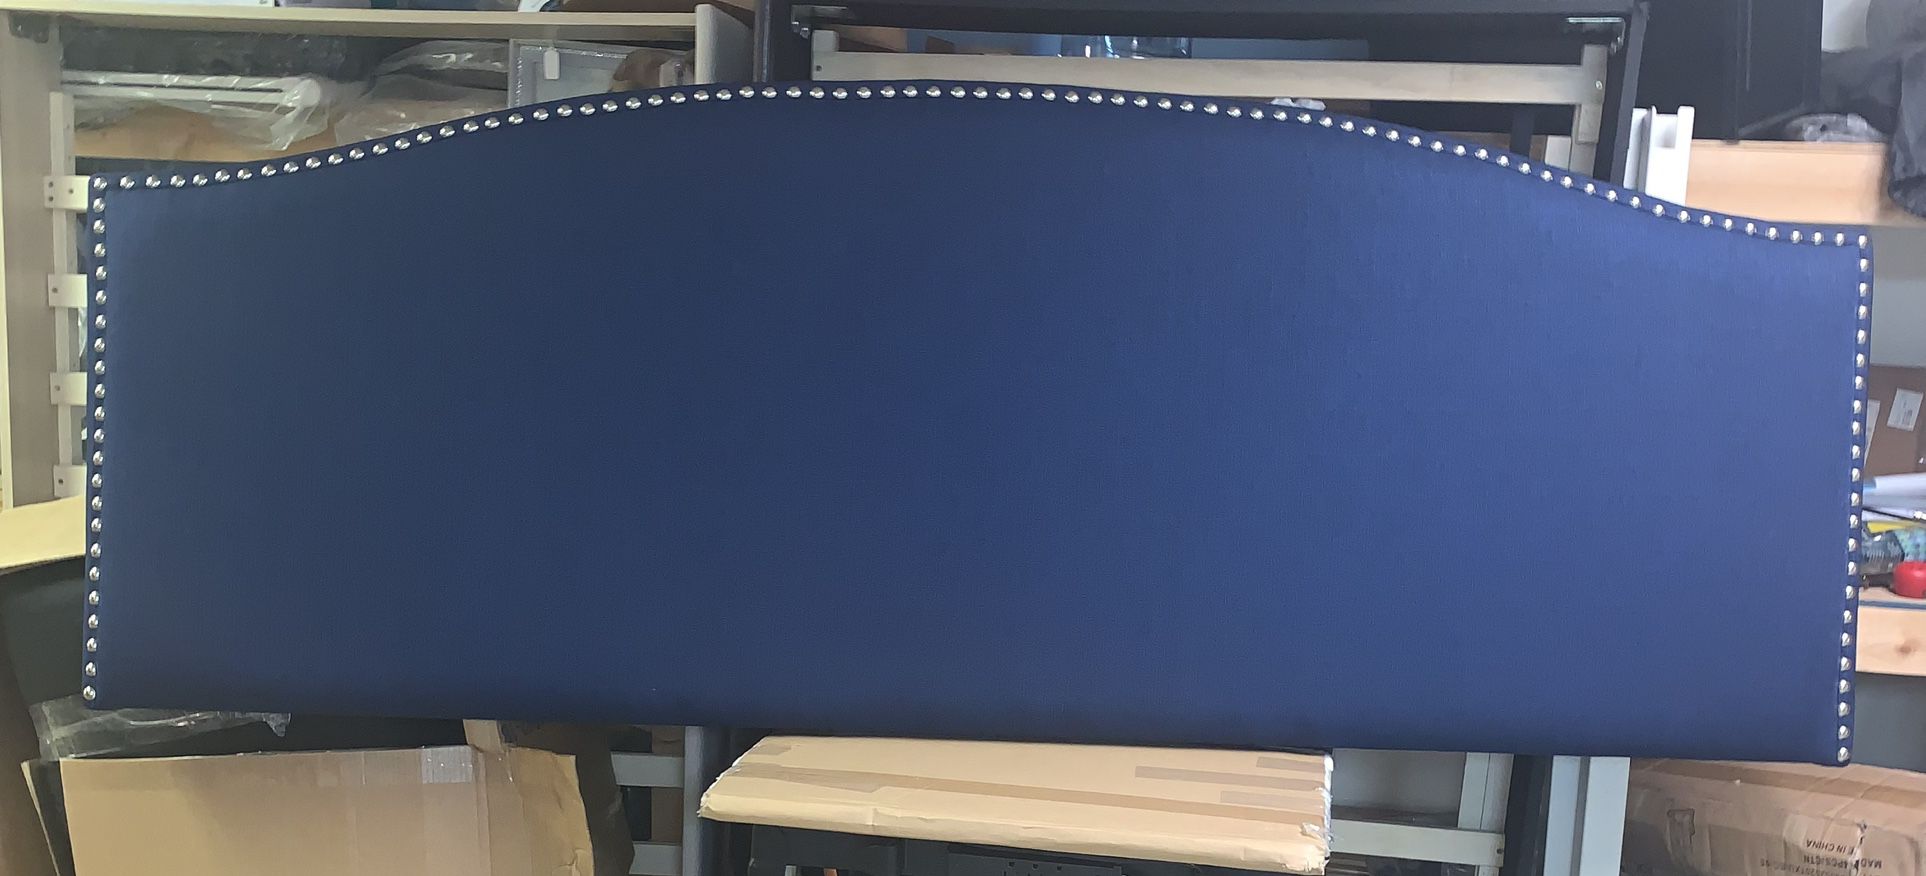 New Linen Upholstered Plush Headboard with Nailheads, Blue King ..Headboard Only no Mattress